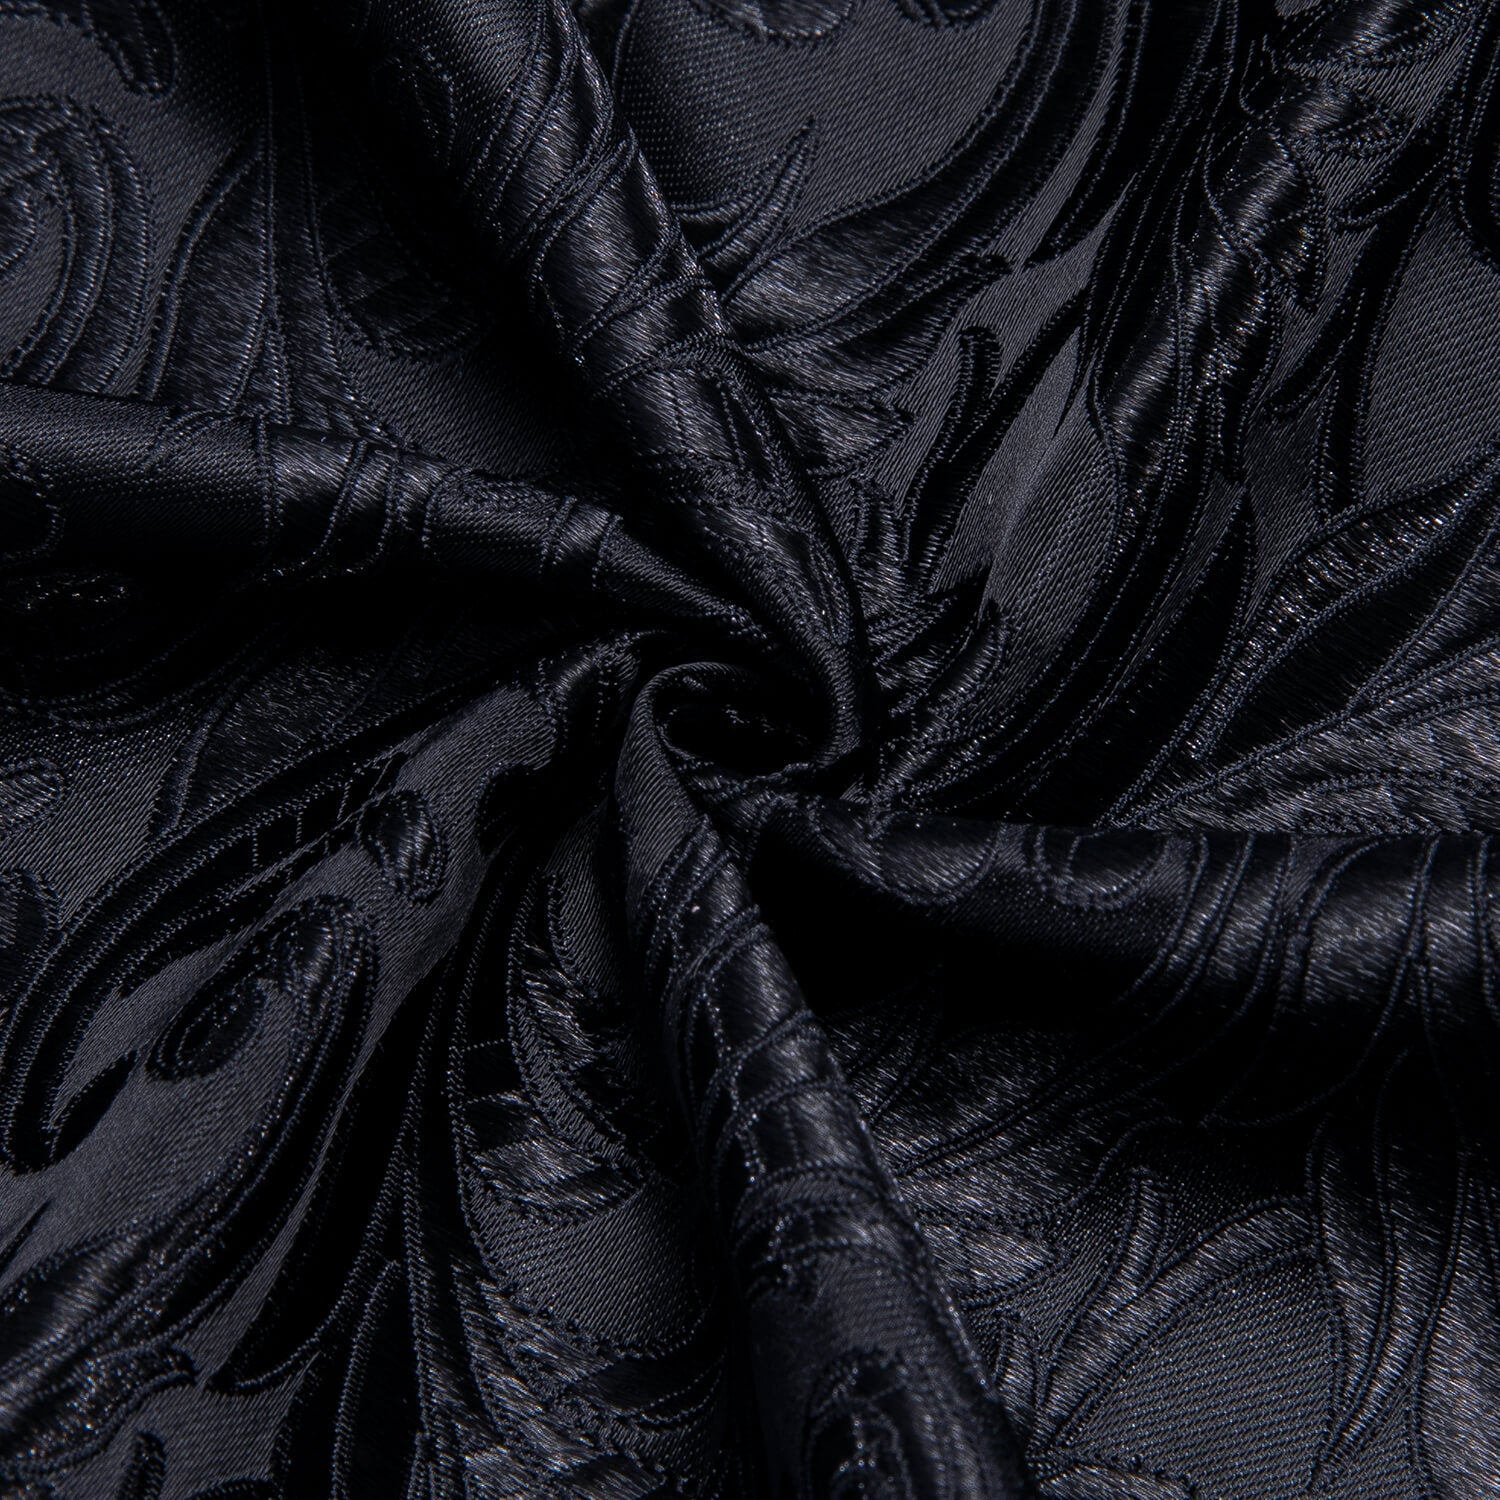 Hi-Tie Long Sleeve Shirt Black Jacquard Floral Silk Men's Shirt Formal